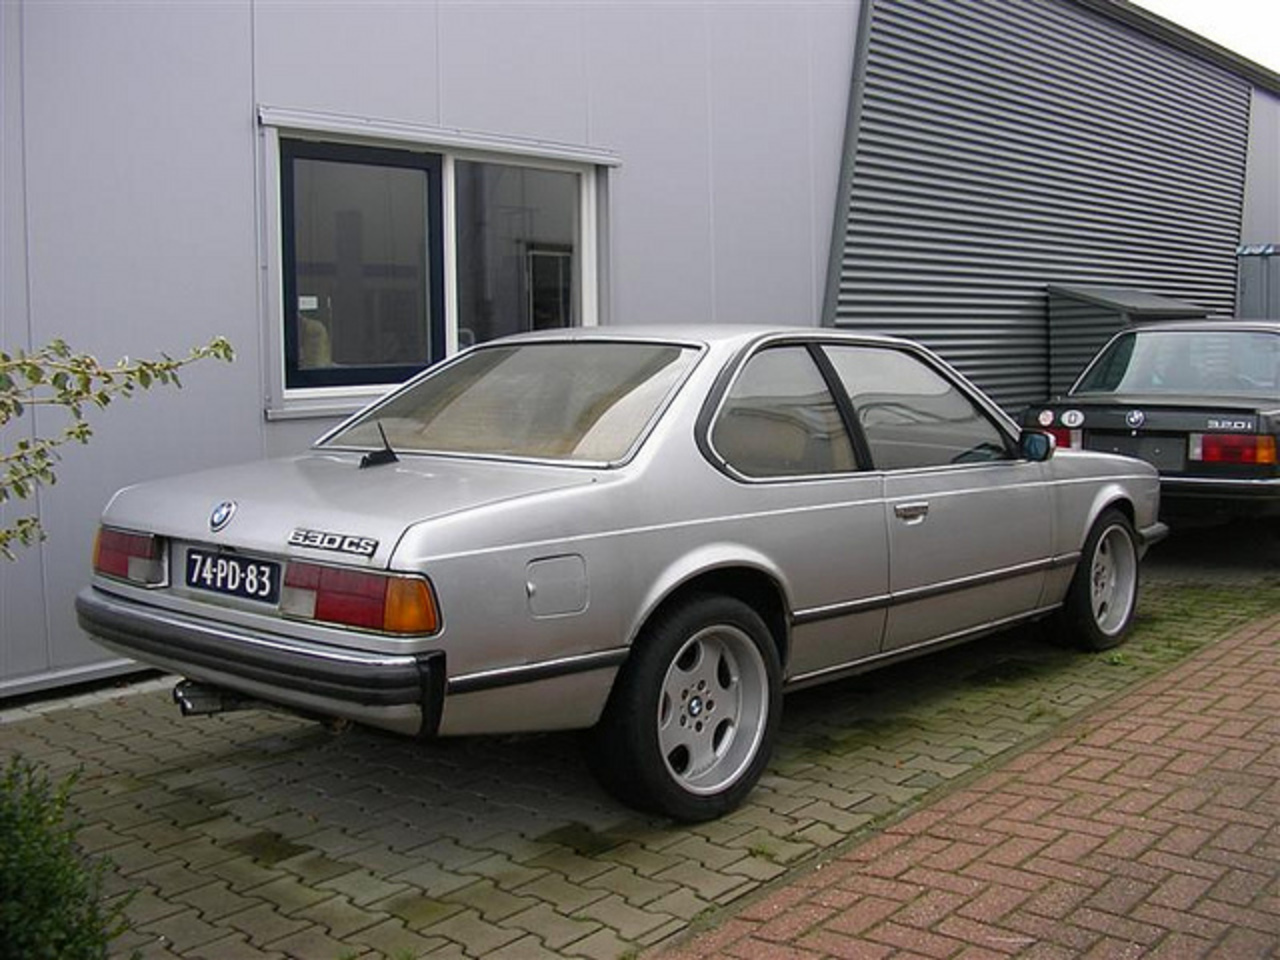 74-PD-83 BMW 630 CS Rijssen | Flickr - Photo Sharing!